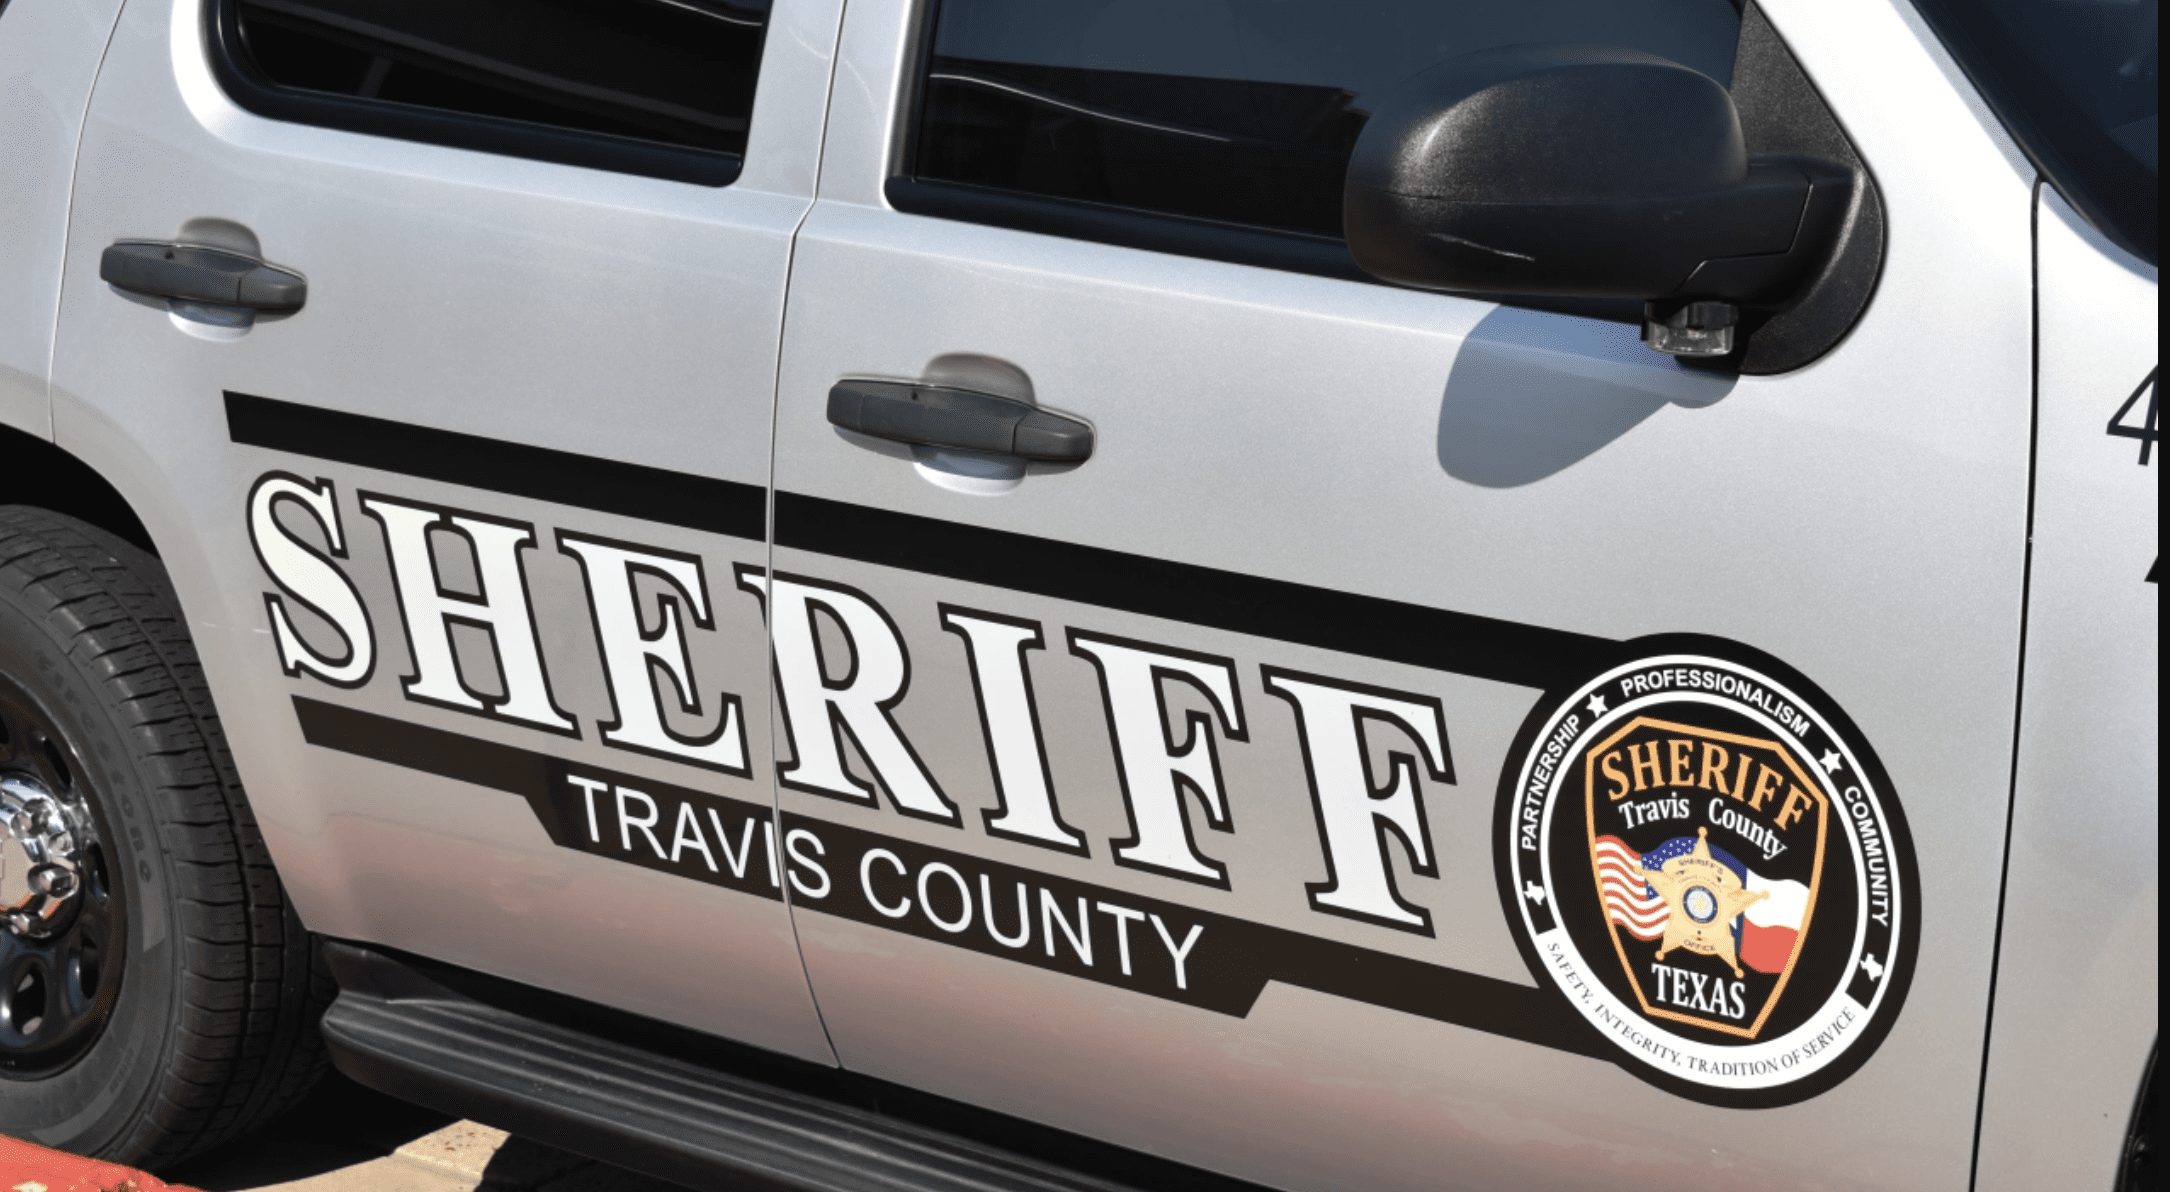 Travis County Sheriff’s Office patrol vehicle